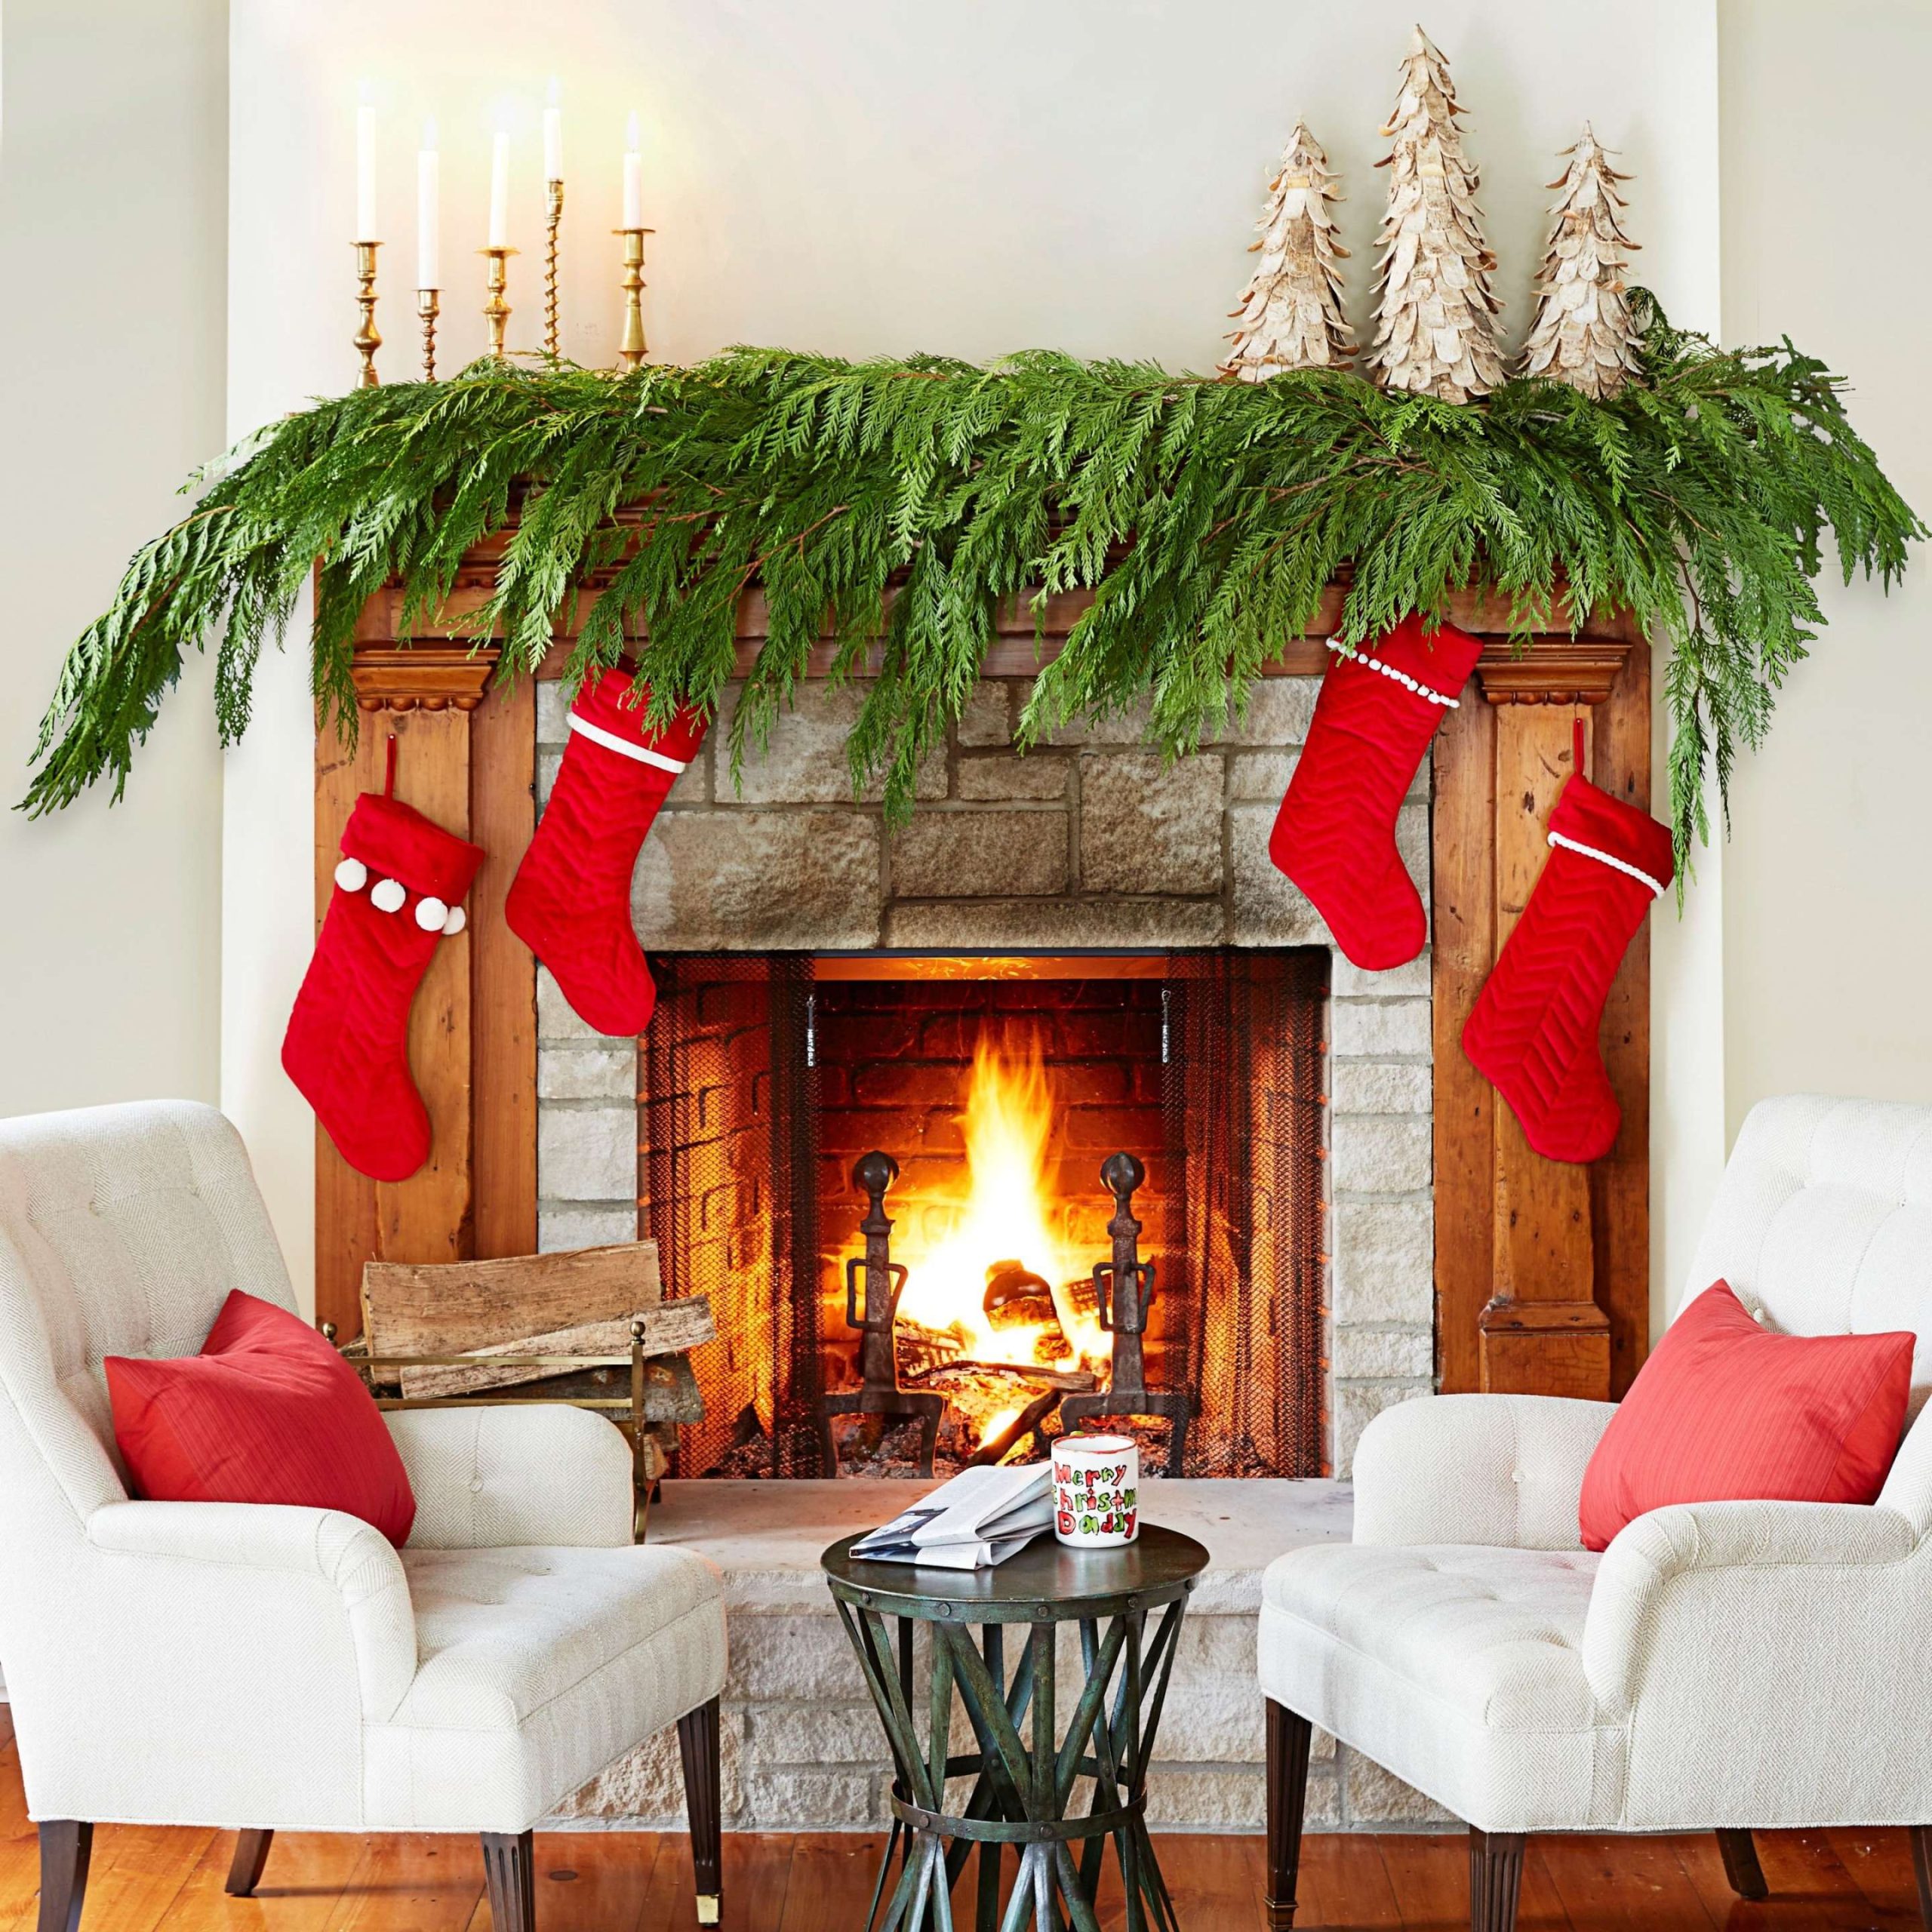 Best Christmas Mantel Ideas - Festive Holiday Mantel Decor